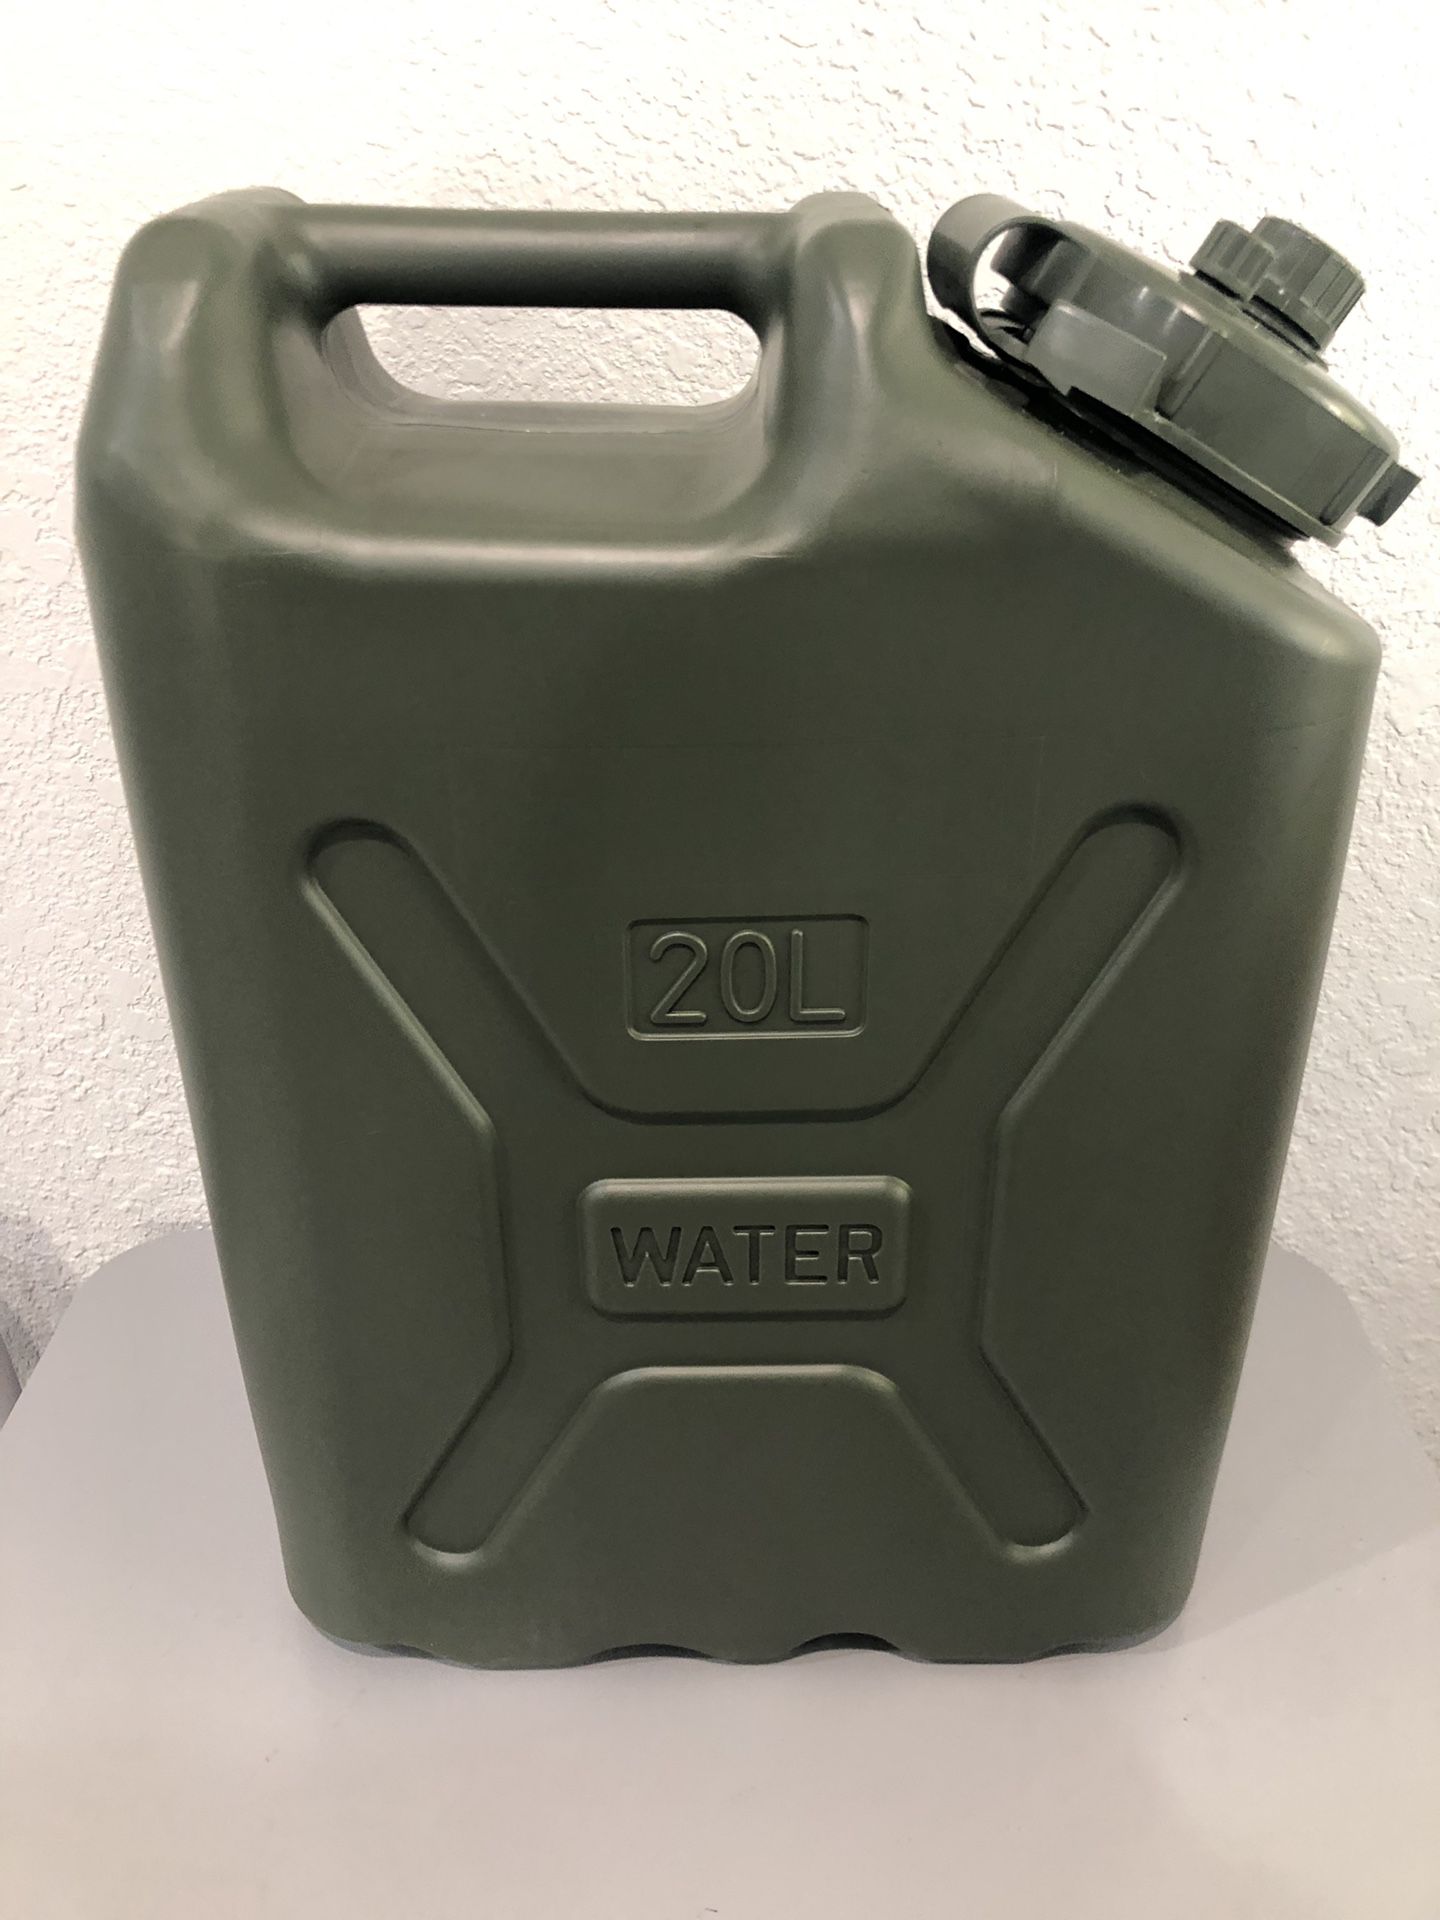 Military grade 5 gallon water jug